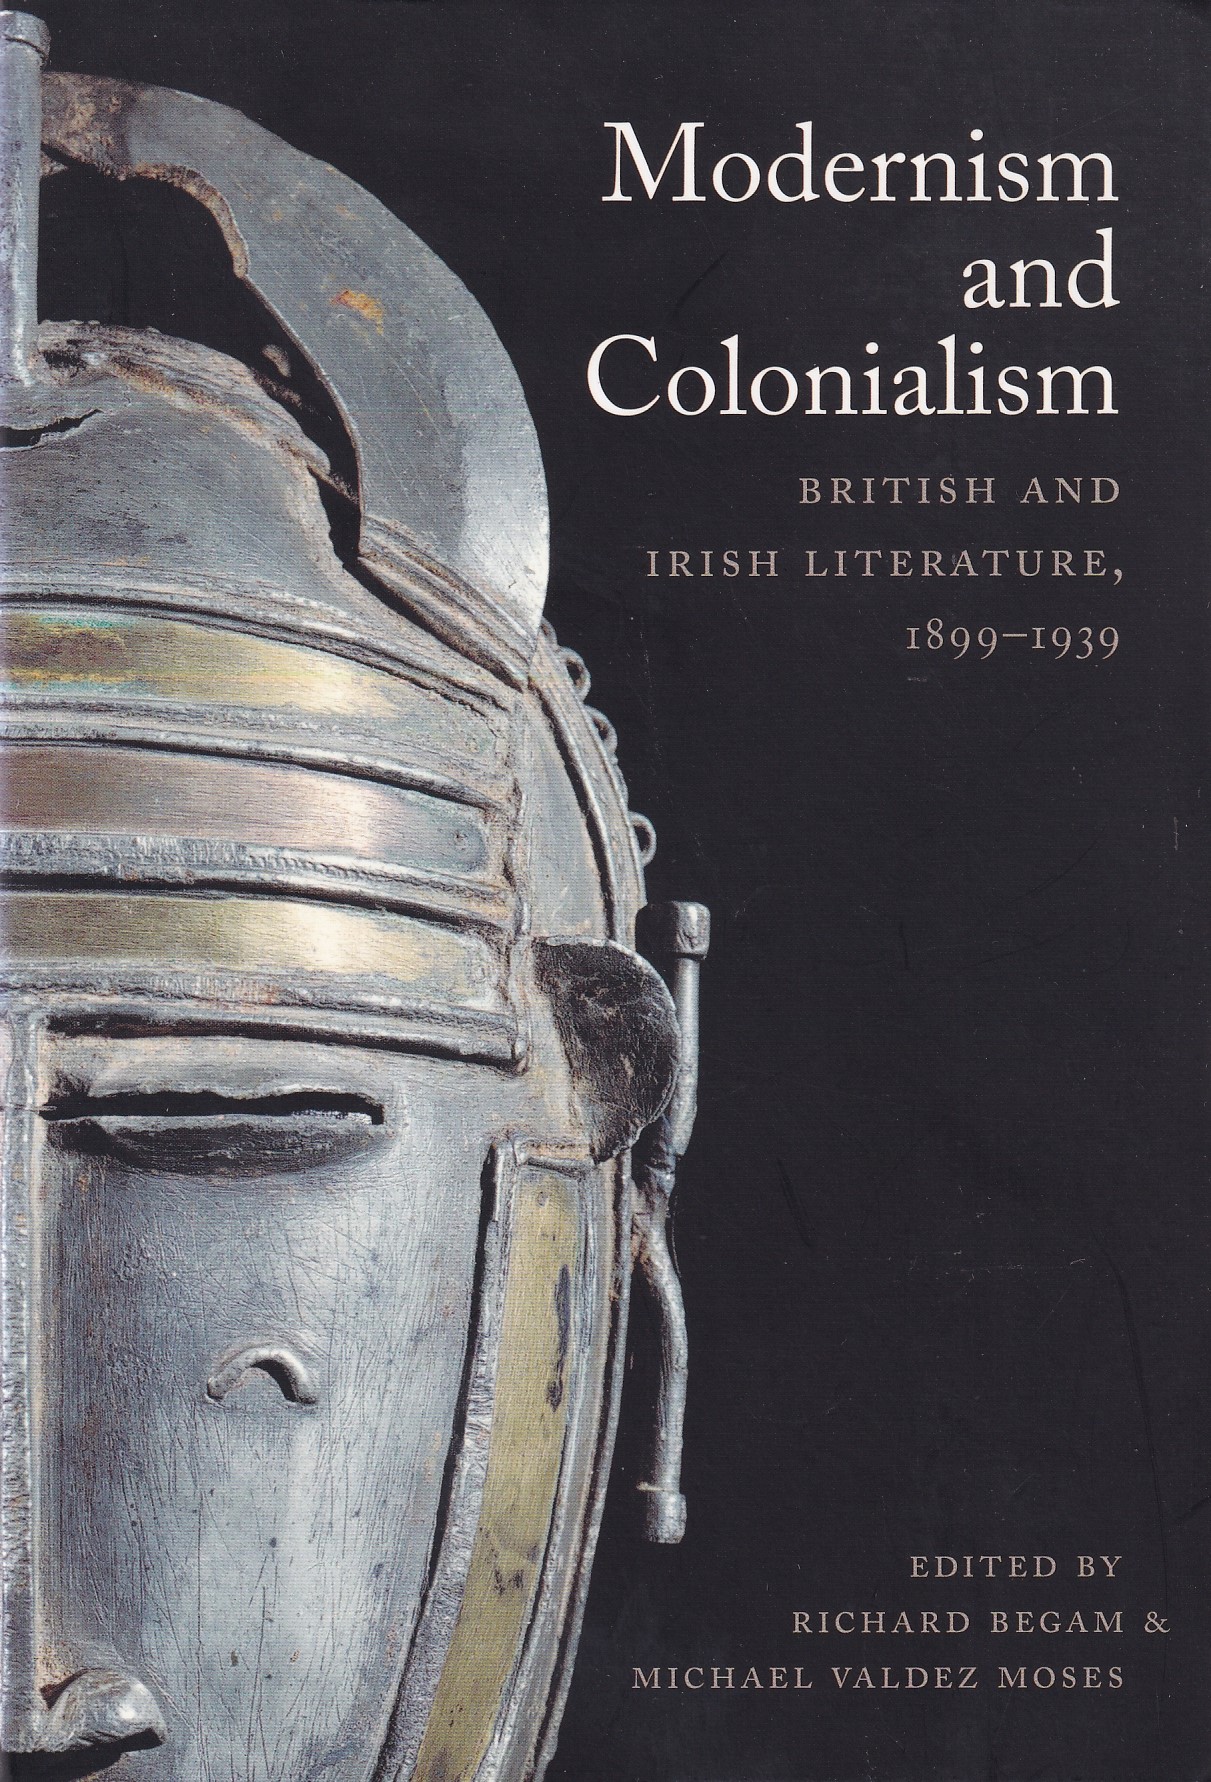 Modernism and Colonialism: British and Irish Literature, 1899–1939 by Richard Begam & Michael Valdez Moses